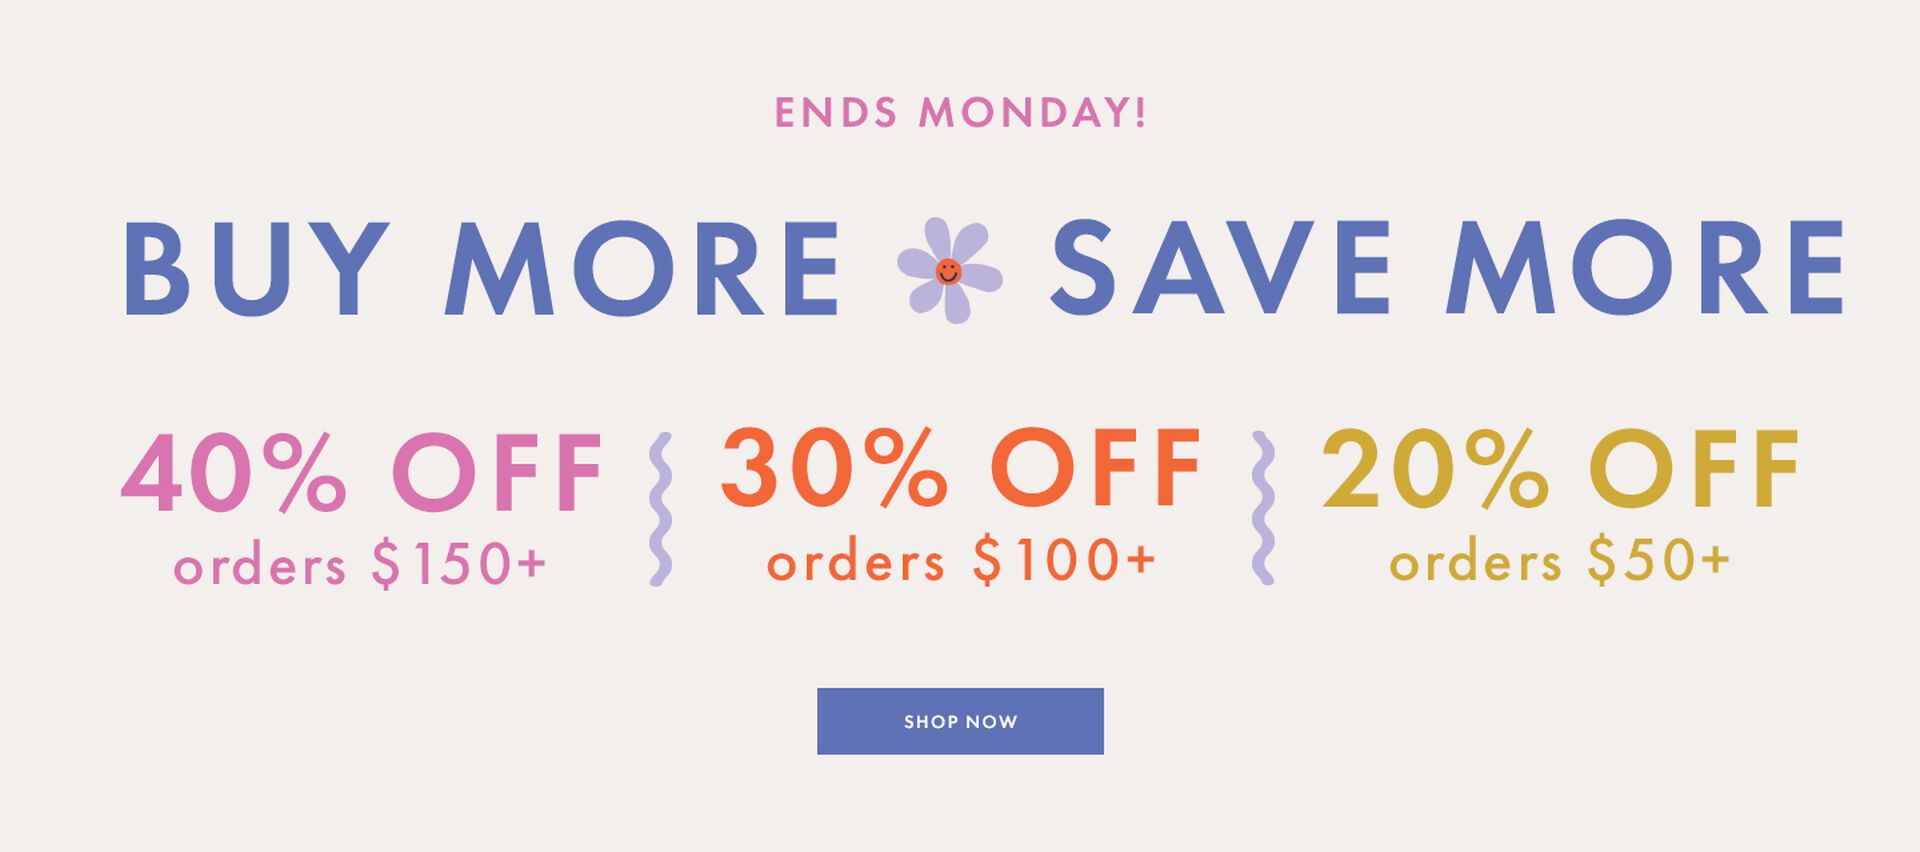 Buy More Save More 40% off orders $150+ 30% off orders $100+ 20% off orders $50+